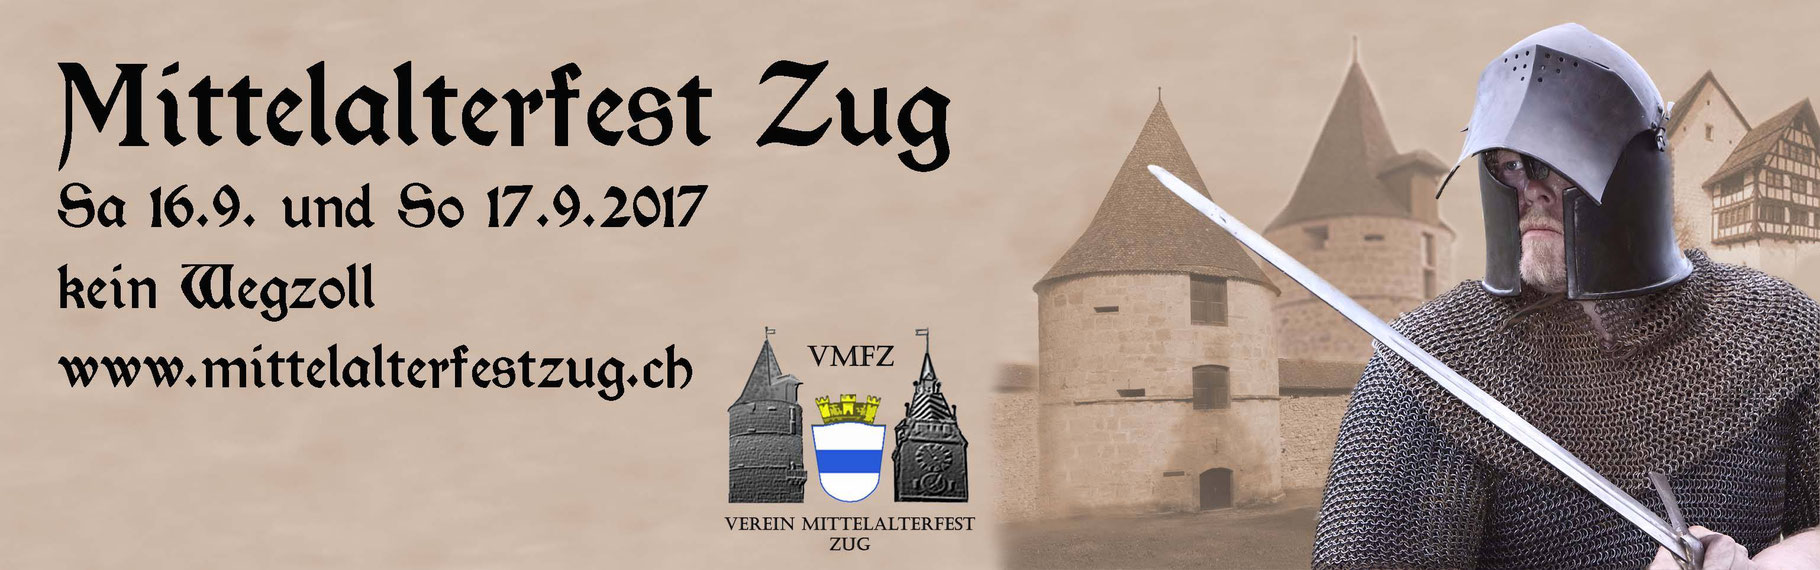 Mittelalterfest-Zug-2017.jpg